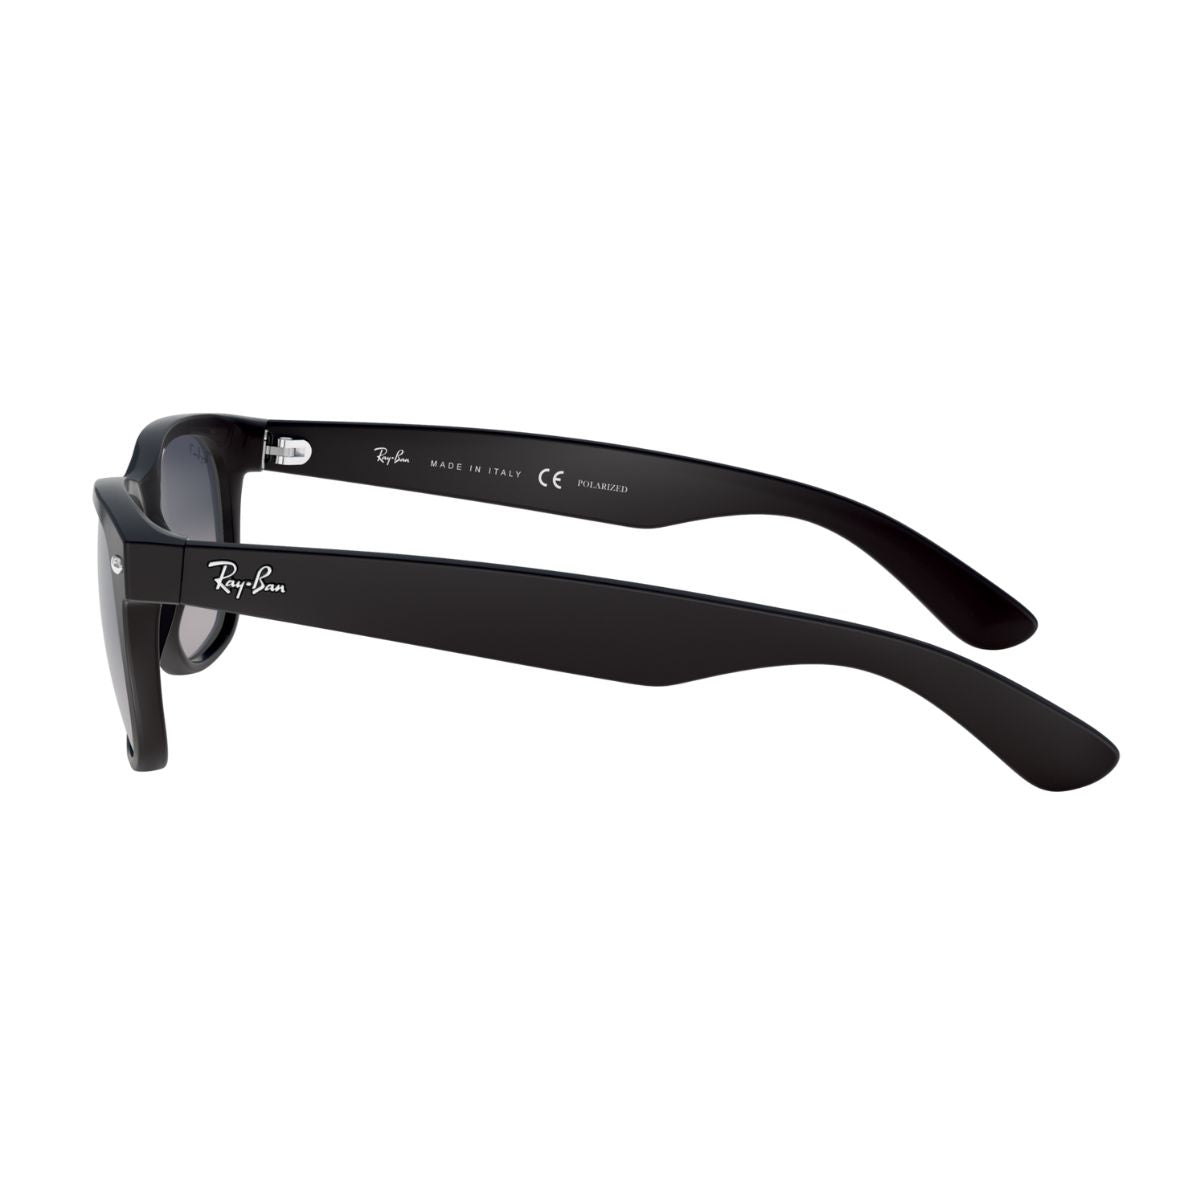 "Buy Ray Ban 2132 601-S/78 Polarized Eyewear Sunglass For Men And Women At Optorium"